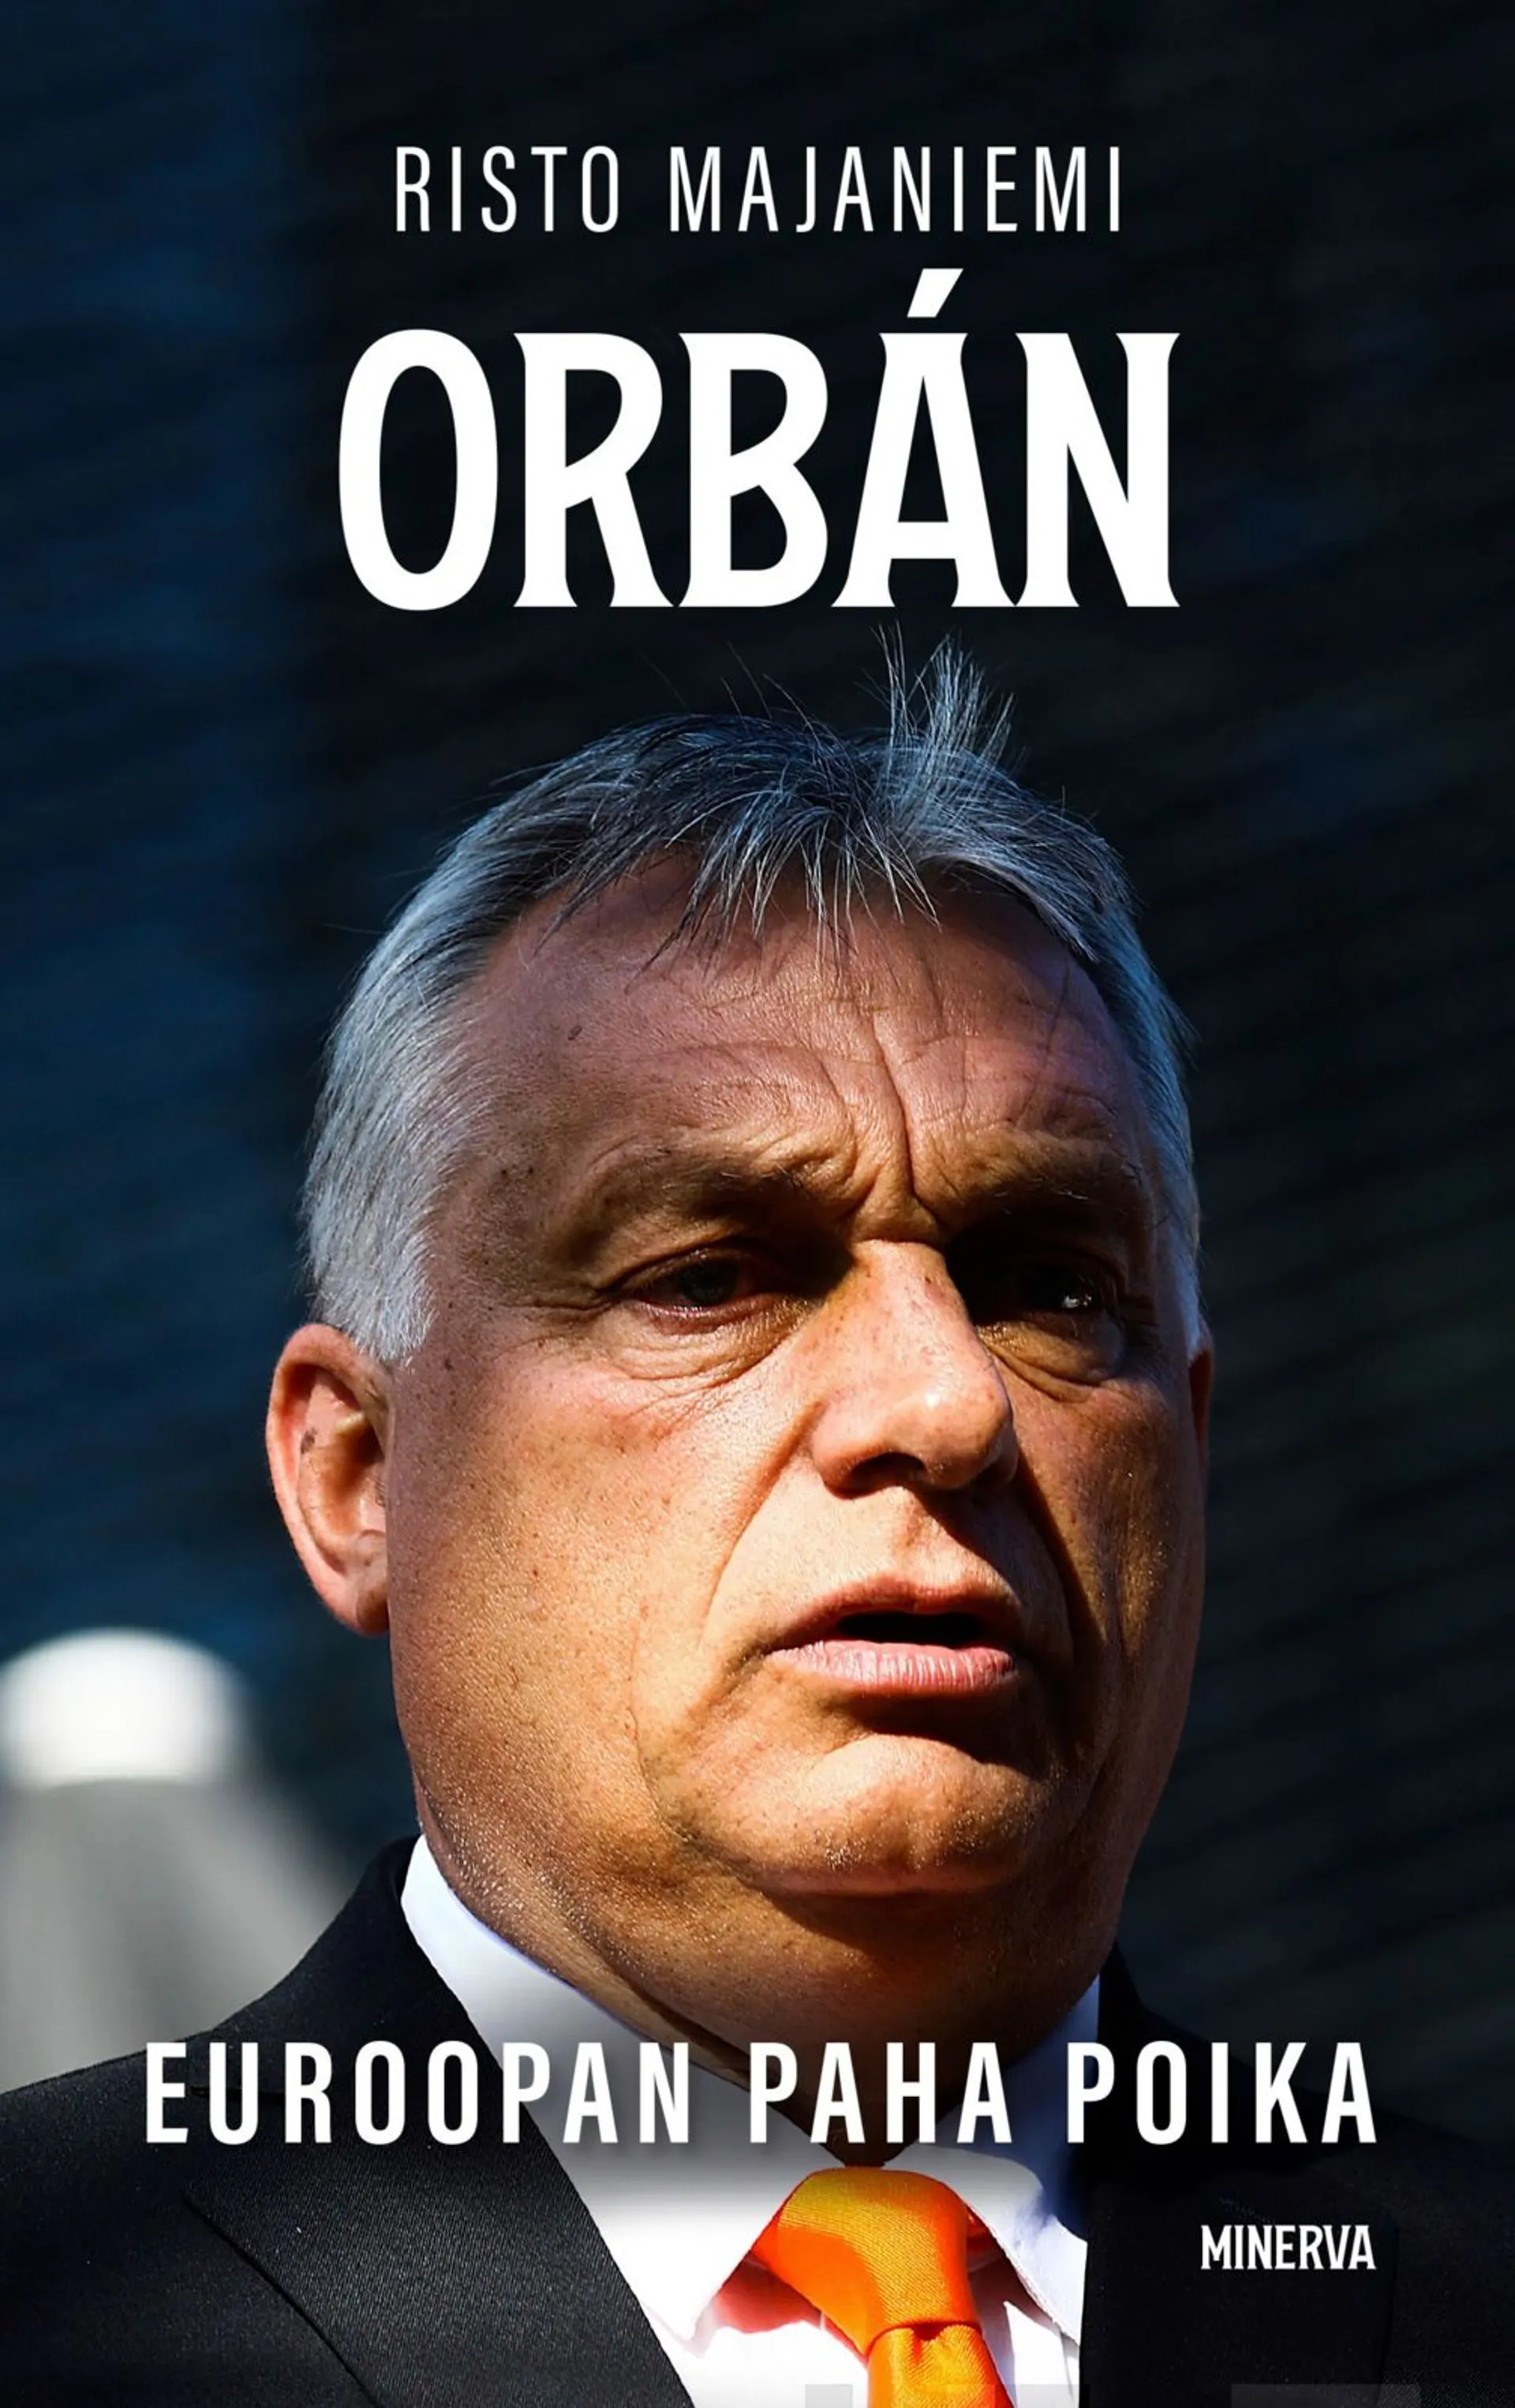 Majaniemi, Orbán - Euroopan paha poika